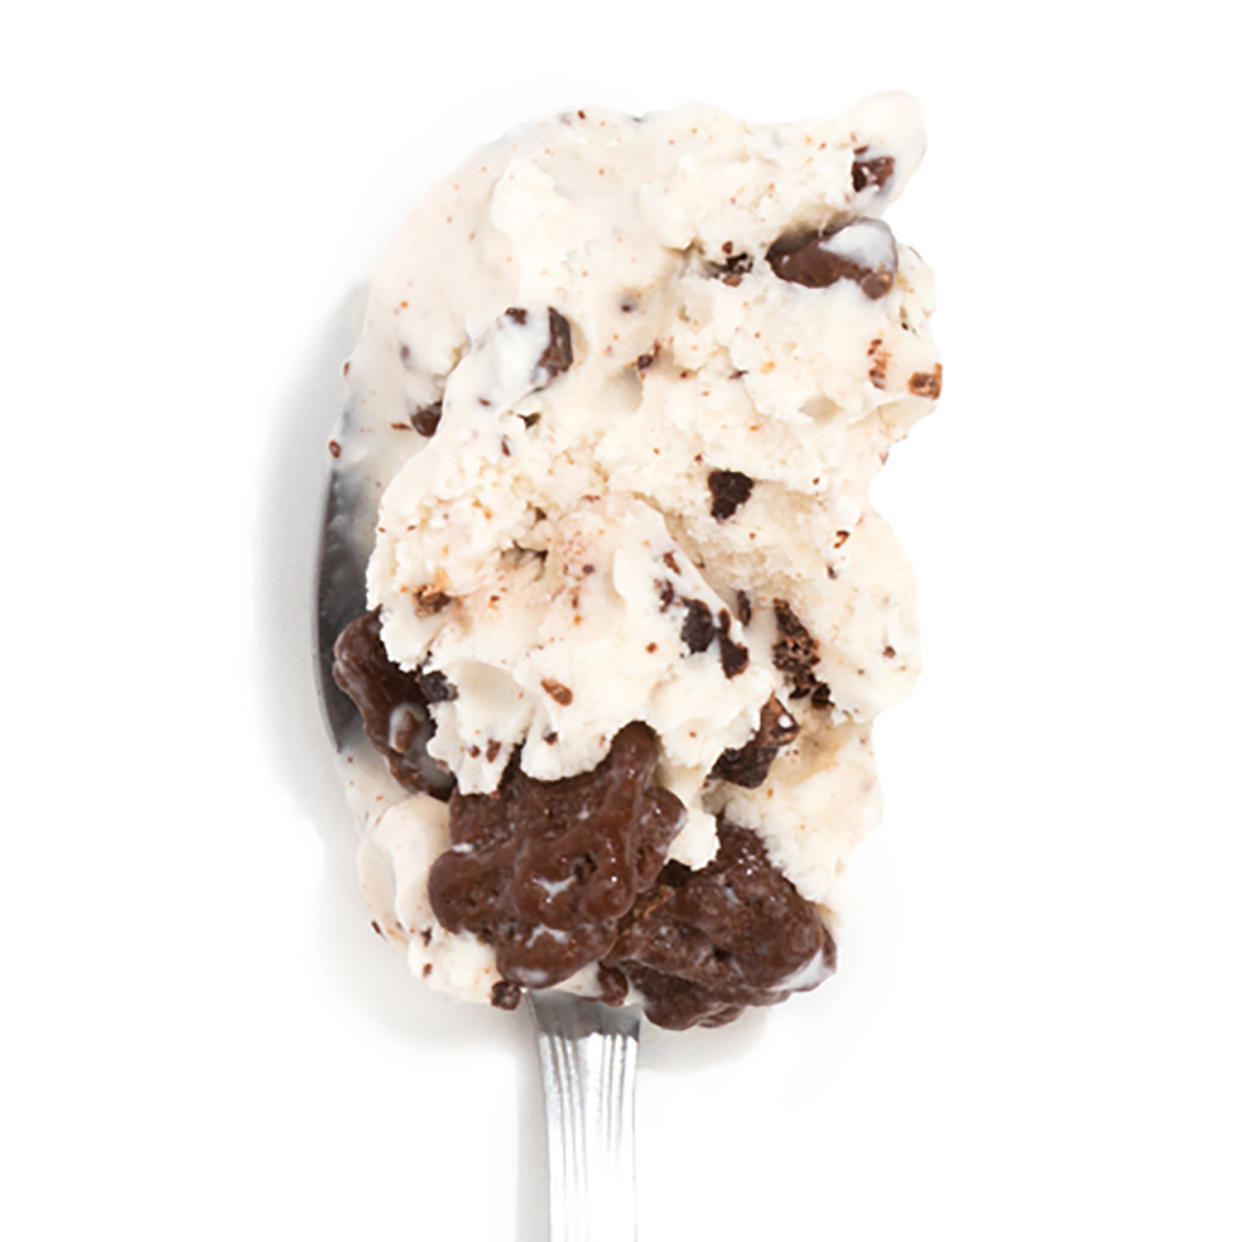 Spoon of ice cream (Jeni's Splendid Ice Creams)